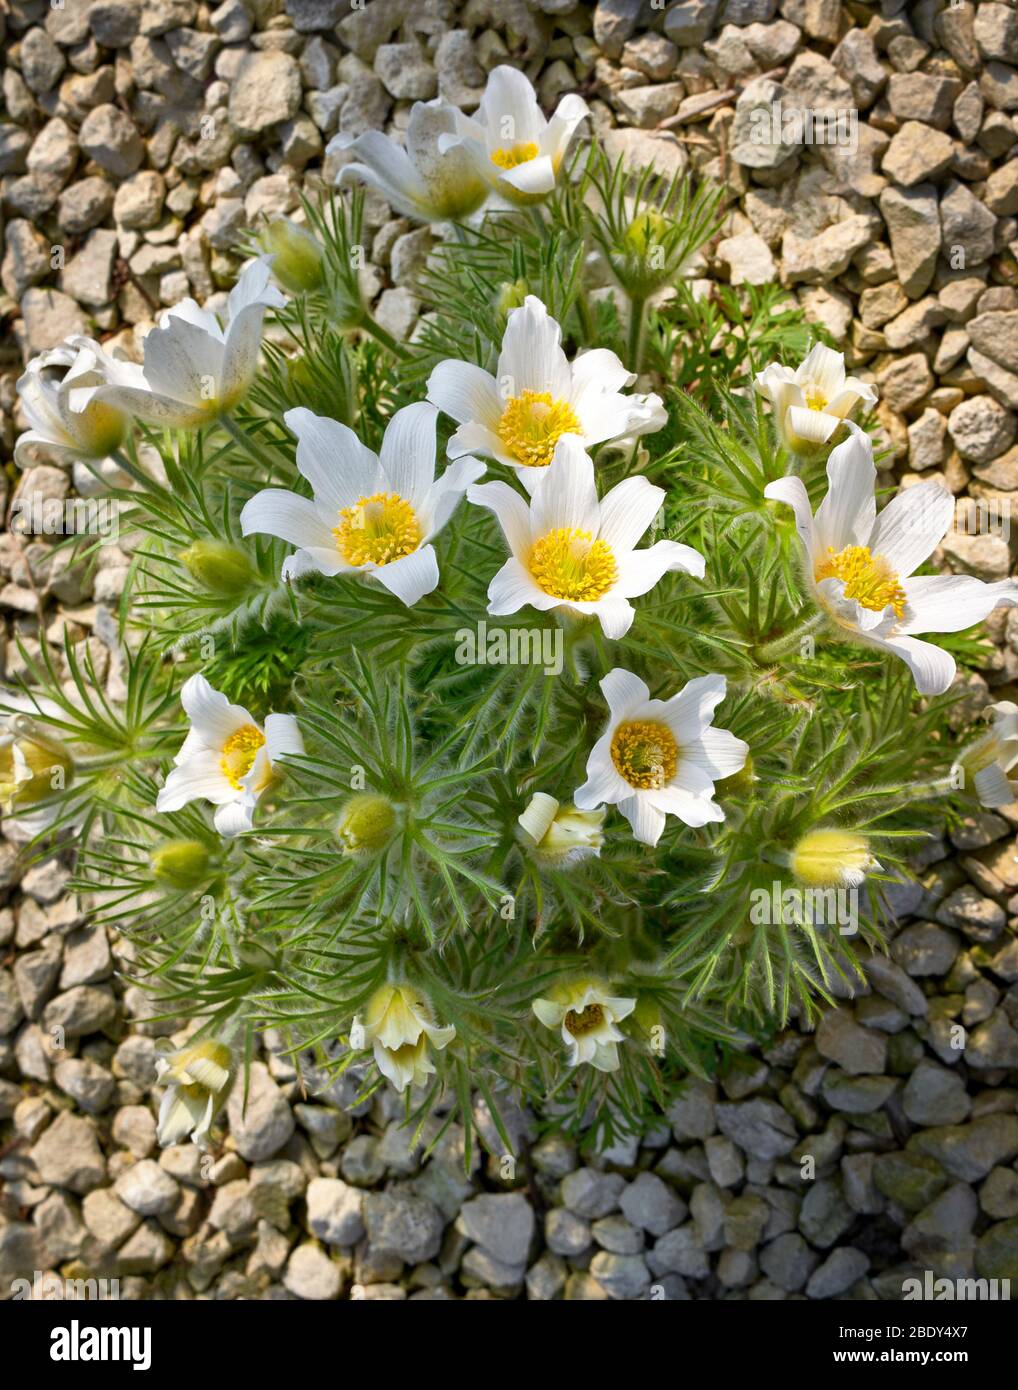 WHITE FLOWERS OF THE PULSATILLA PLANT Pulsatilla vulgaris PASQUEFLOWER OF THE FAMILY  Ranunculaceae Stock Photo